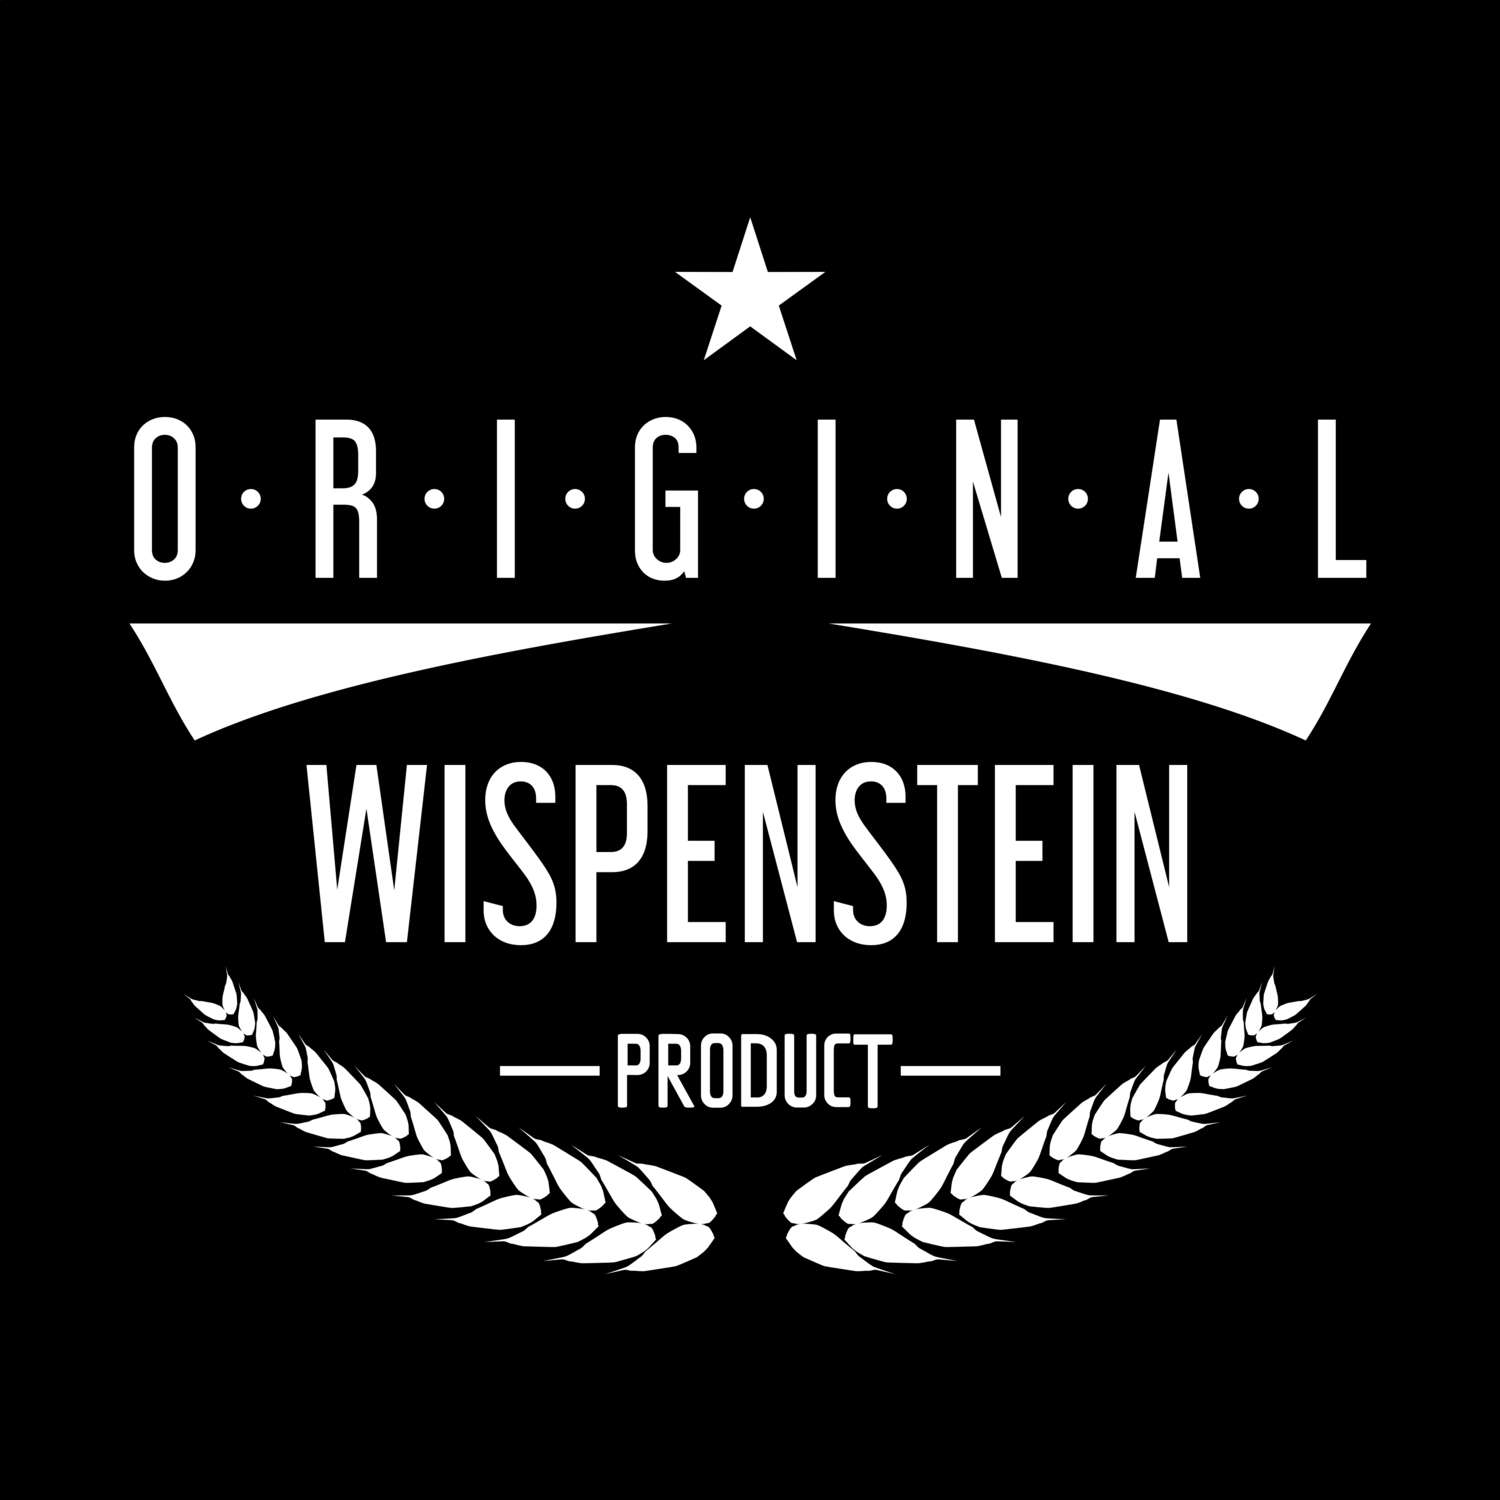 Wispenstein T-Shirt »Original Product«